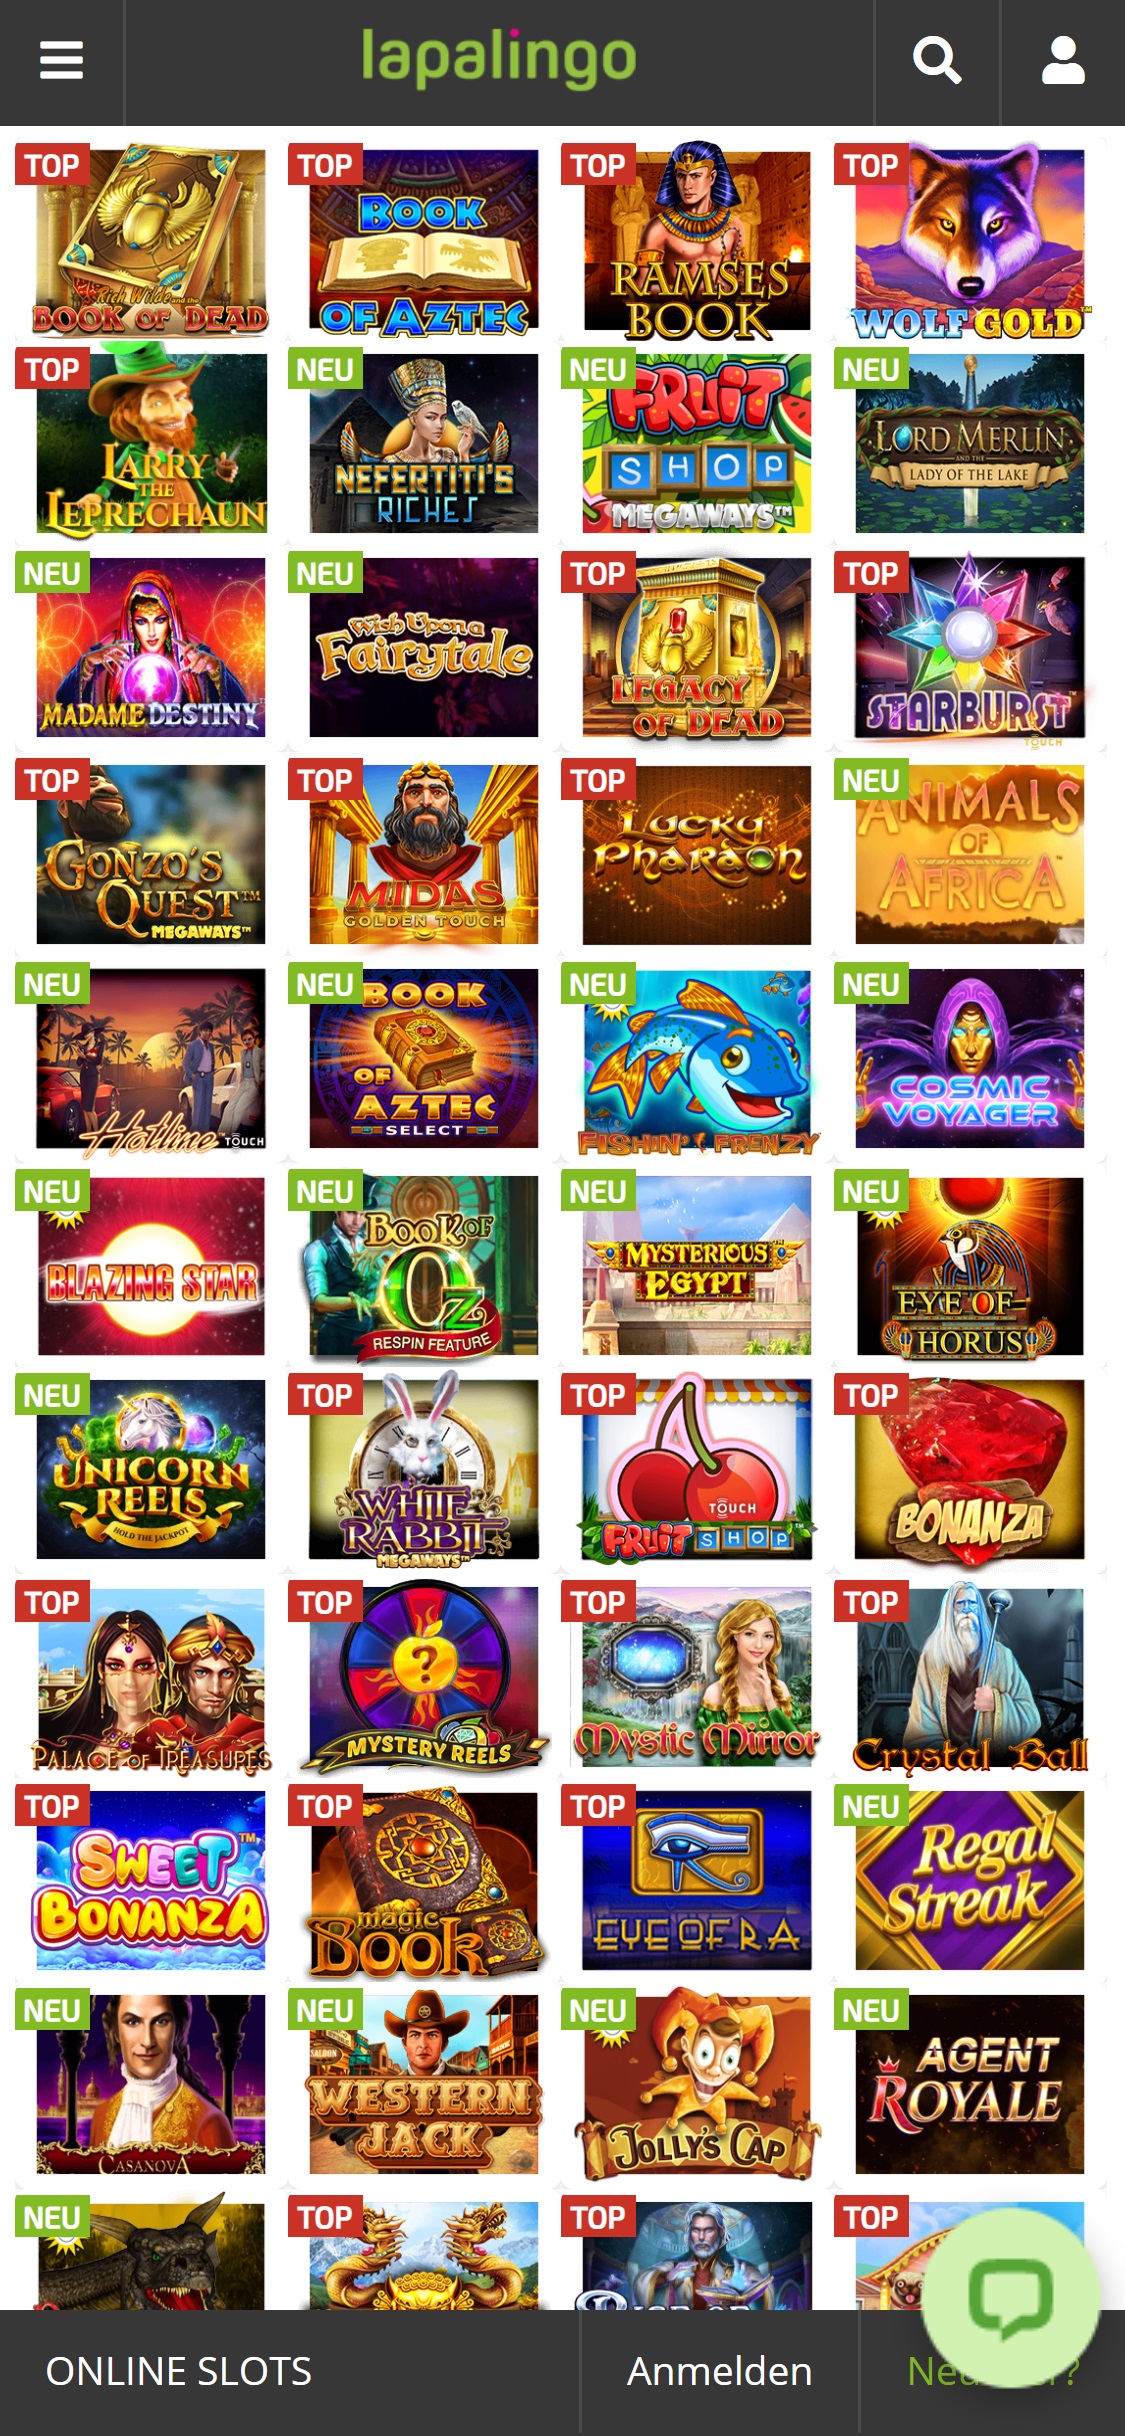 Lapalingo Casino Mobile Games Review